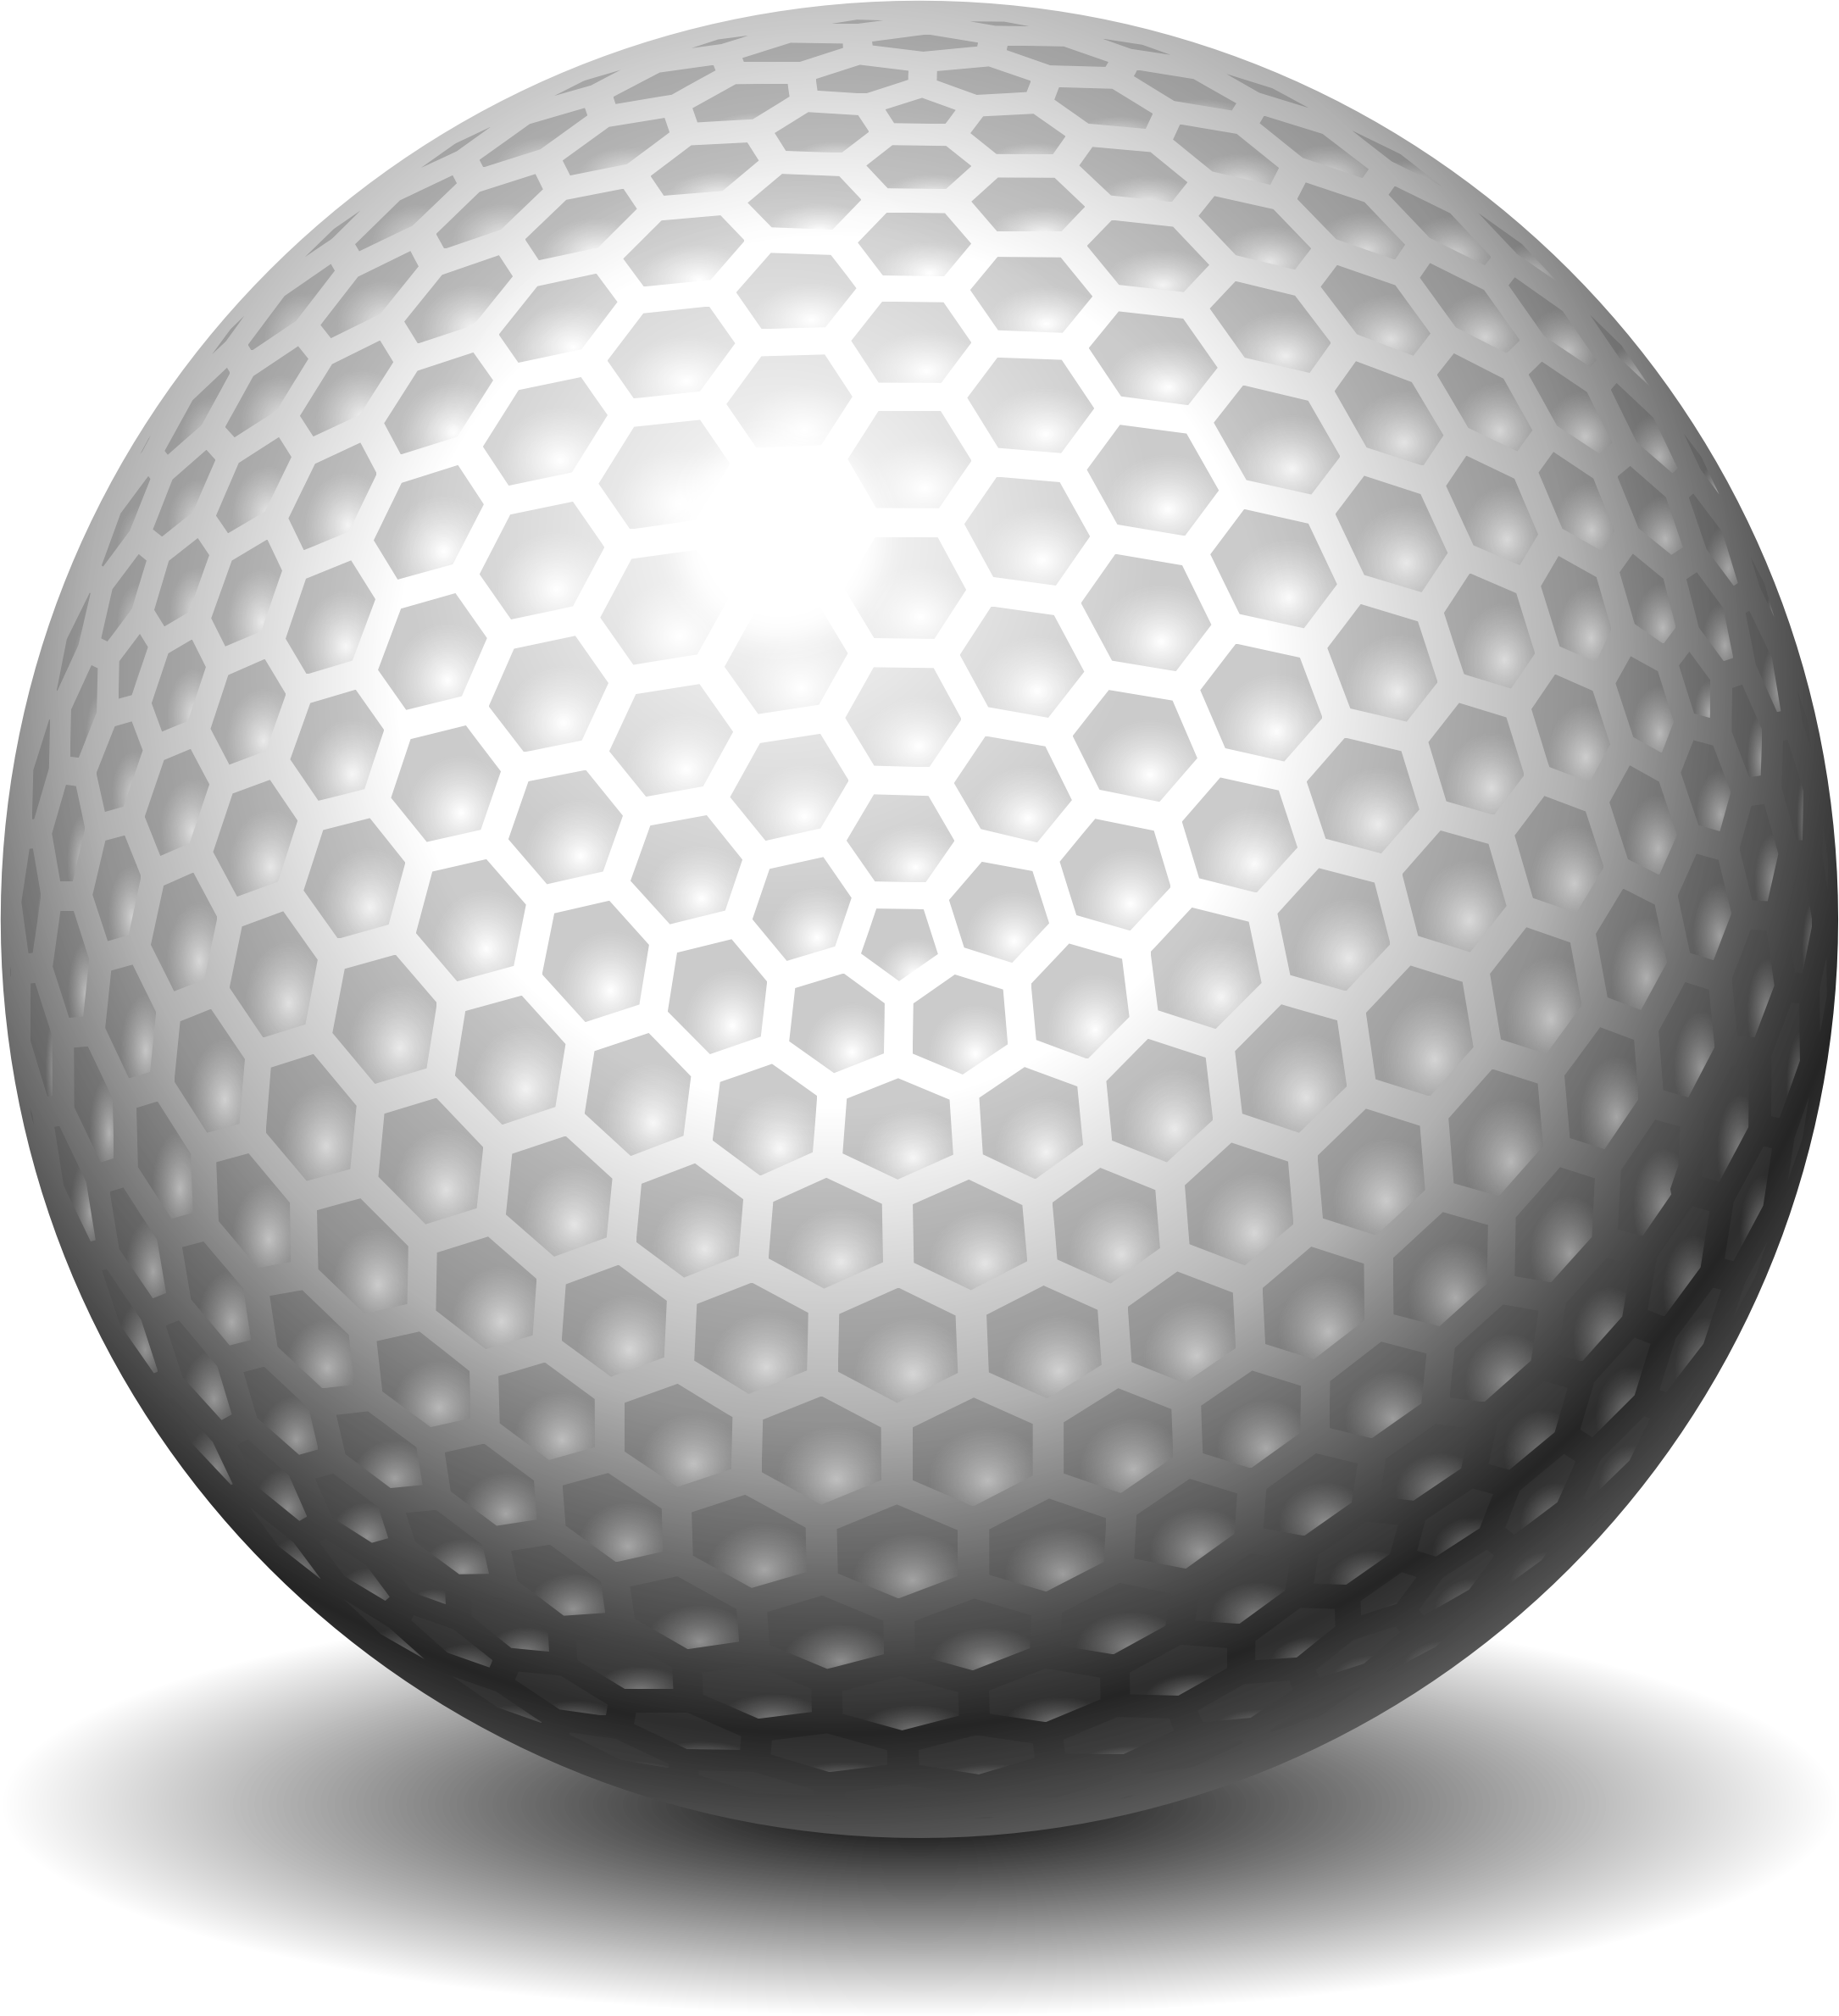 Clipart golf ball golfo kamuoliukas